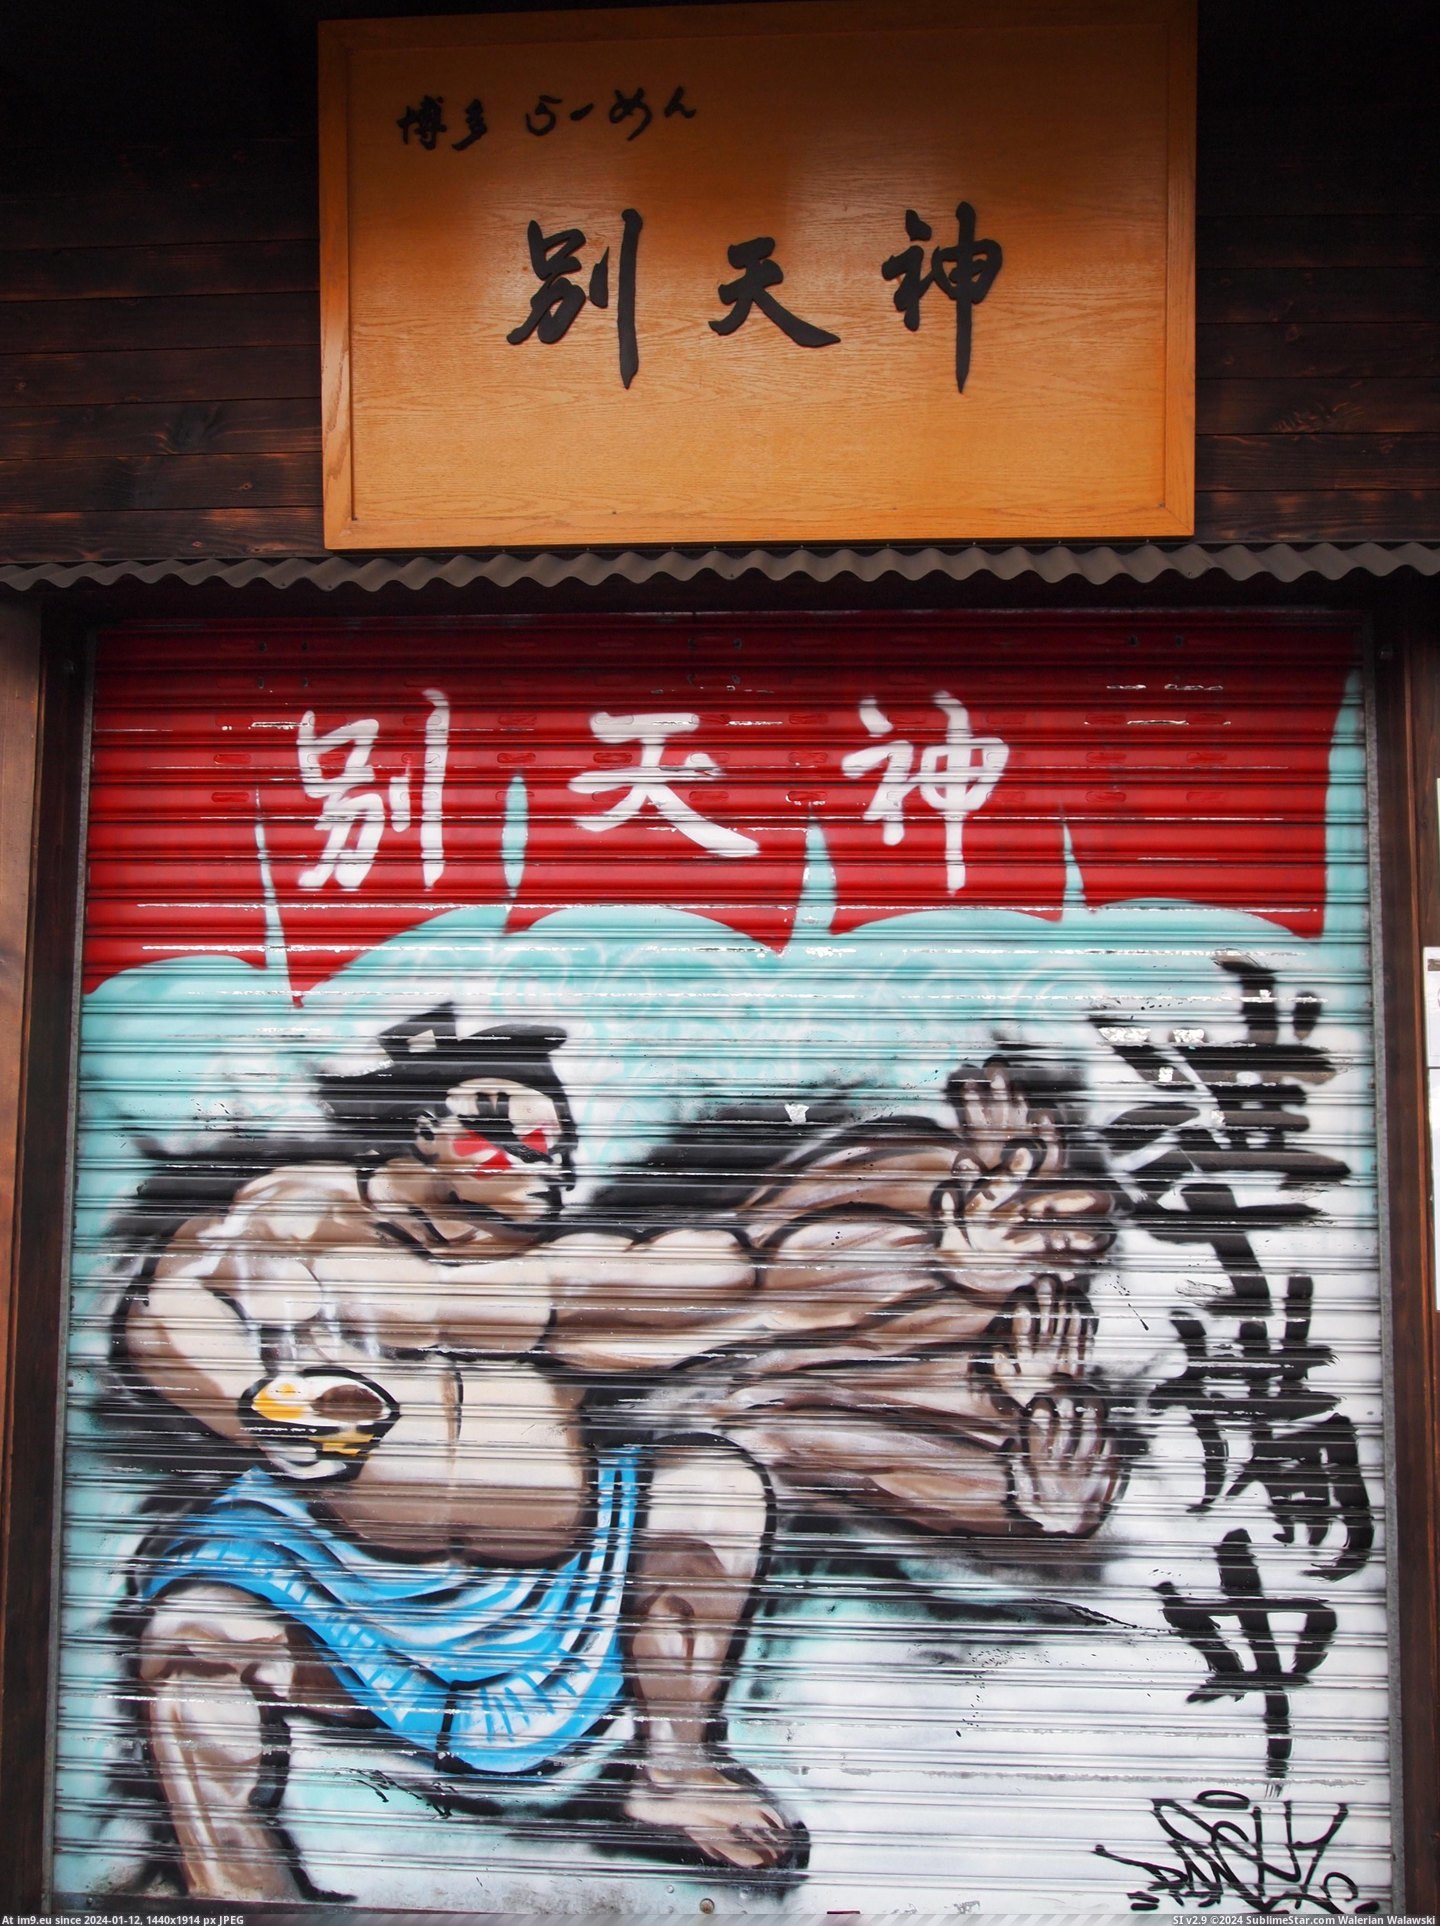 #Gaming #Art #Fighter #Hong #Kong #Street #Graffiti [Gaming] Street Fighter graffiti art in Hong Kong Pic. (Obraz z album My r/GAMING favs))